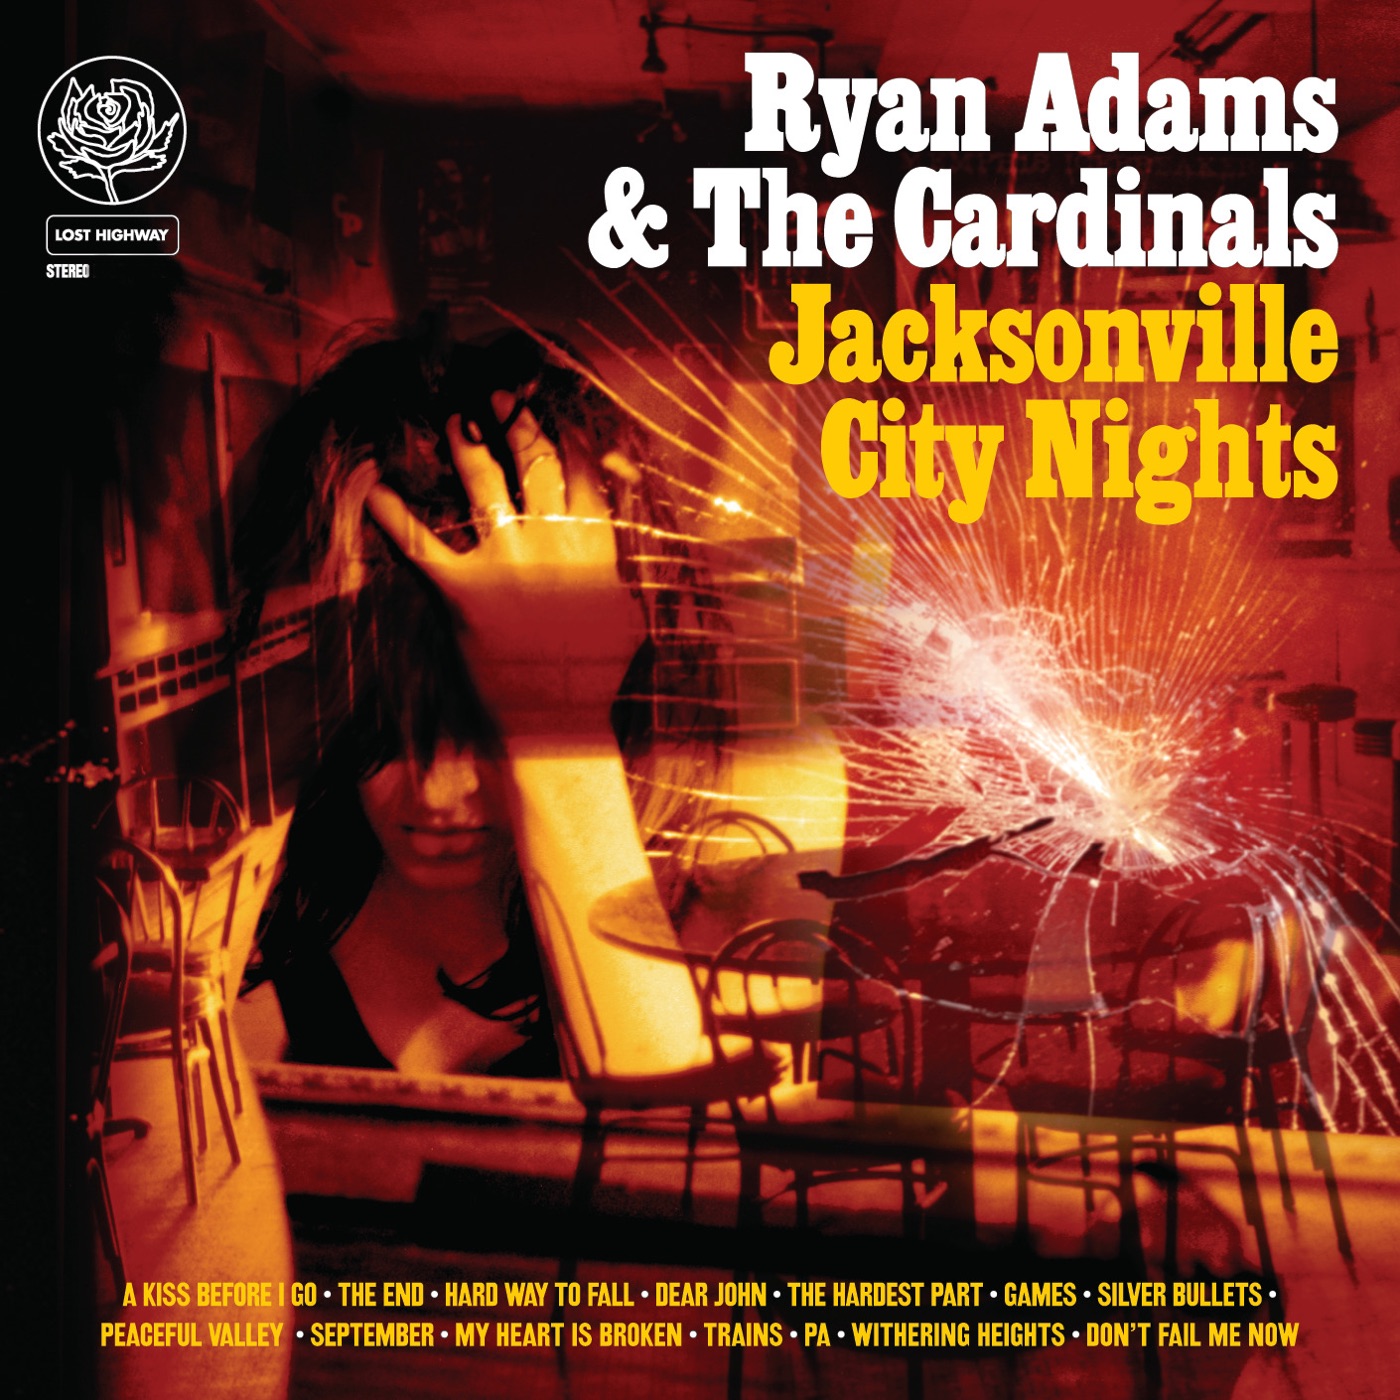 Jacksonville City Nights by Ryan Adams & The Cardinals, Ryan Adams